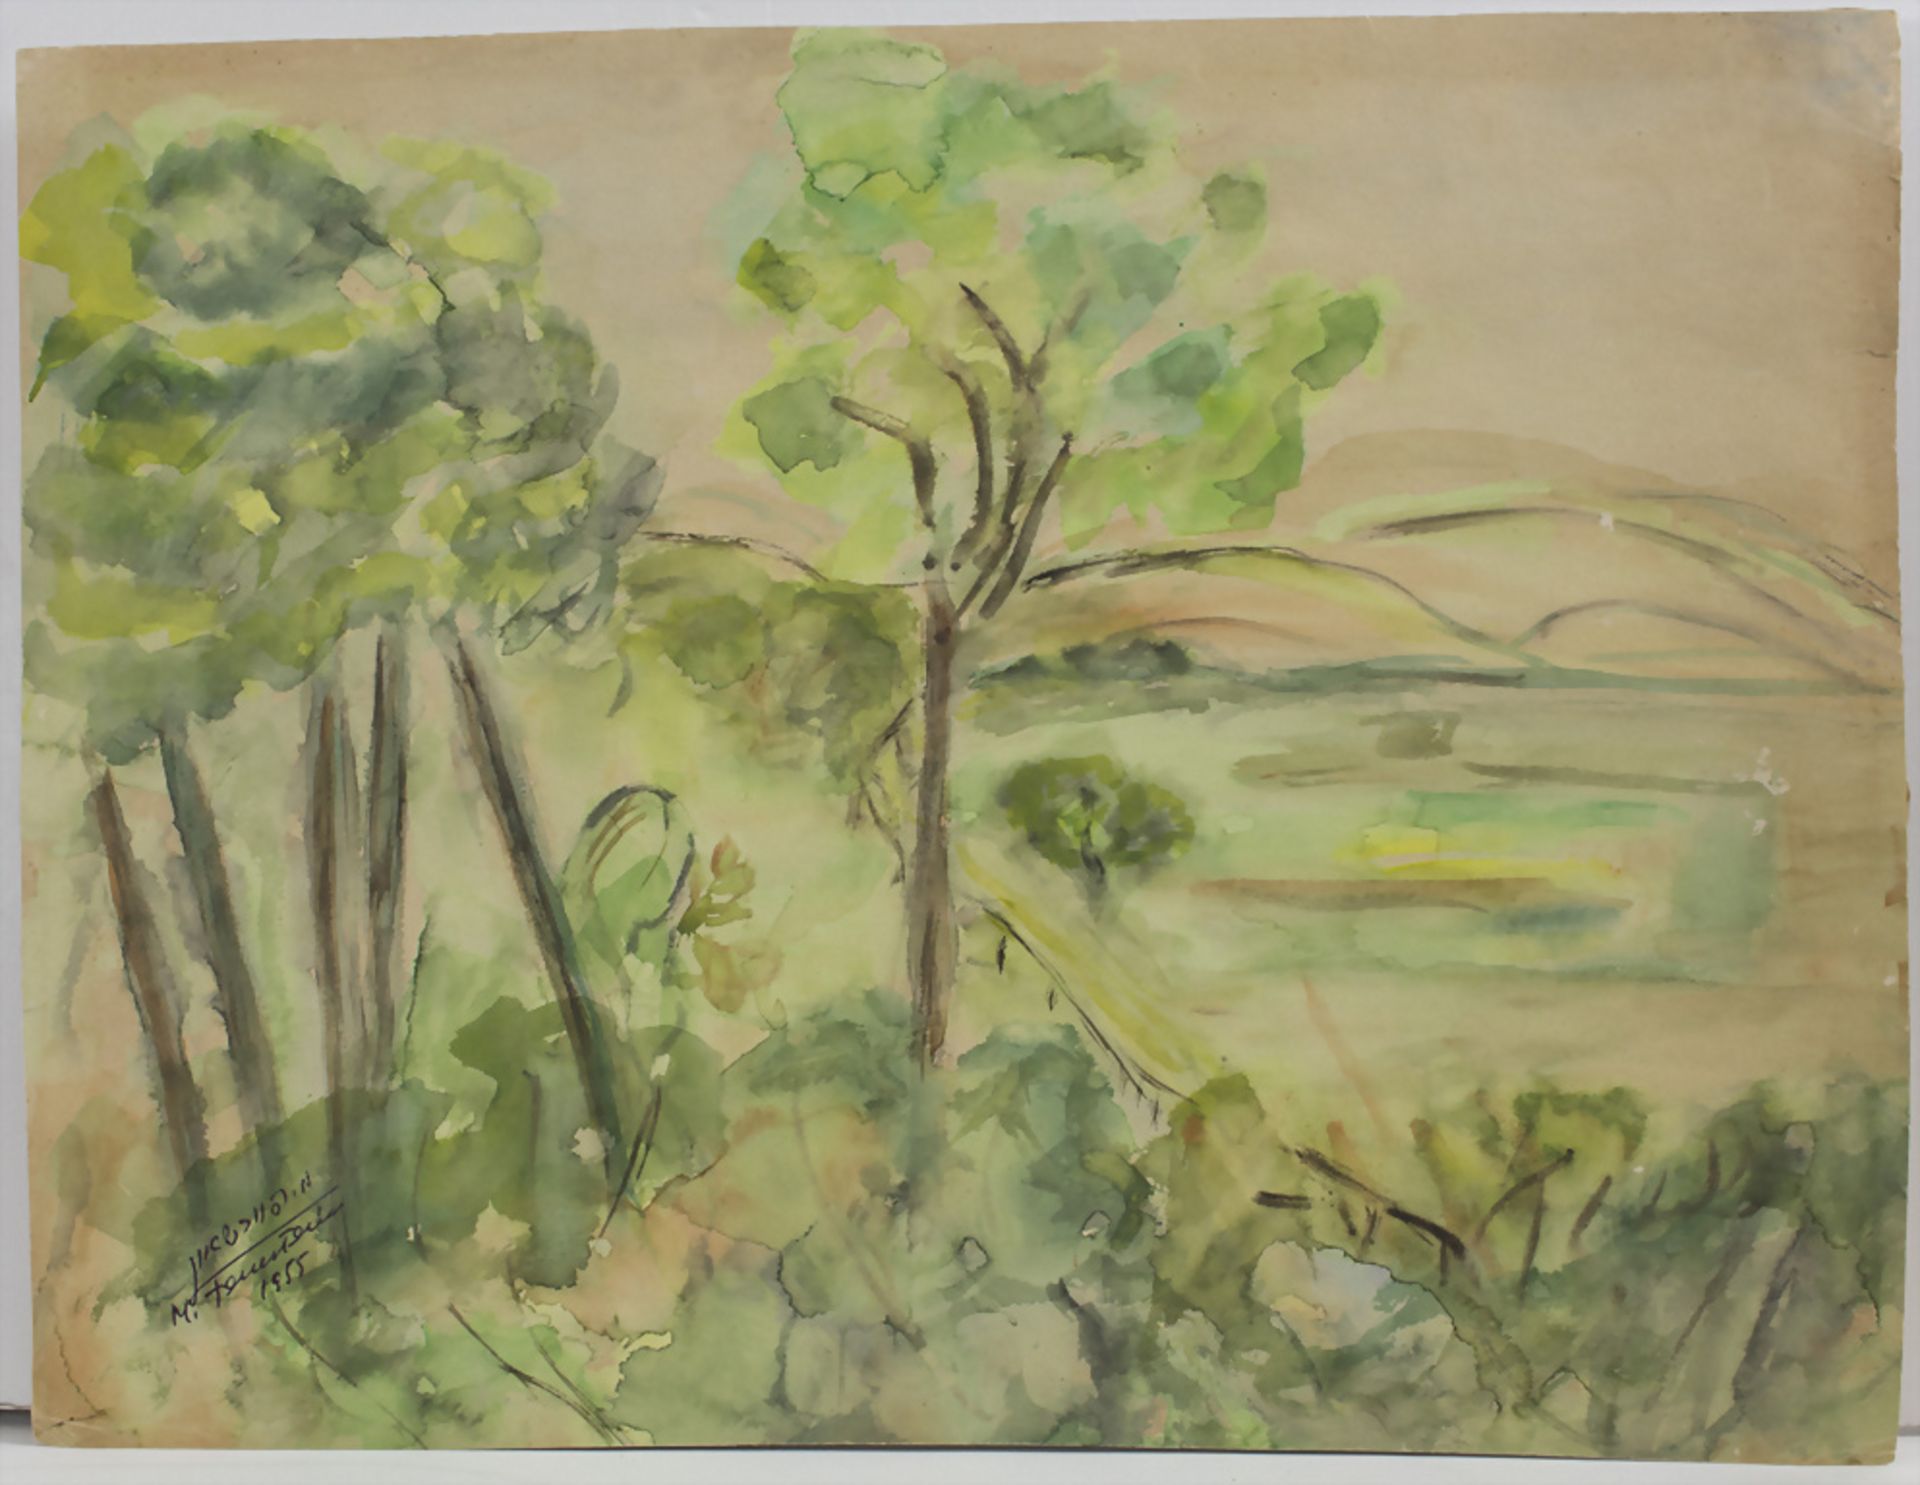 Mordechai Feuerstein (1903-?), 'Landschaft in Tschechien' / 'A Czech landscape', 1955